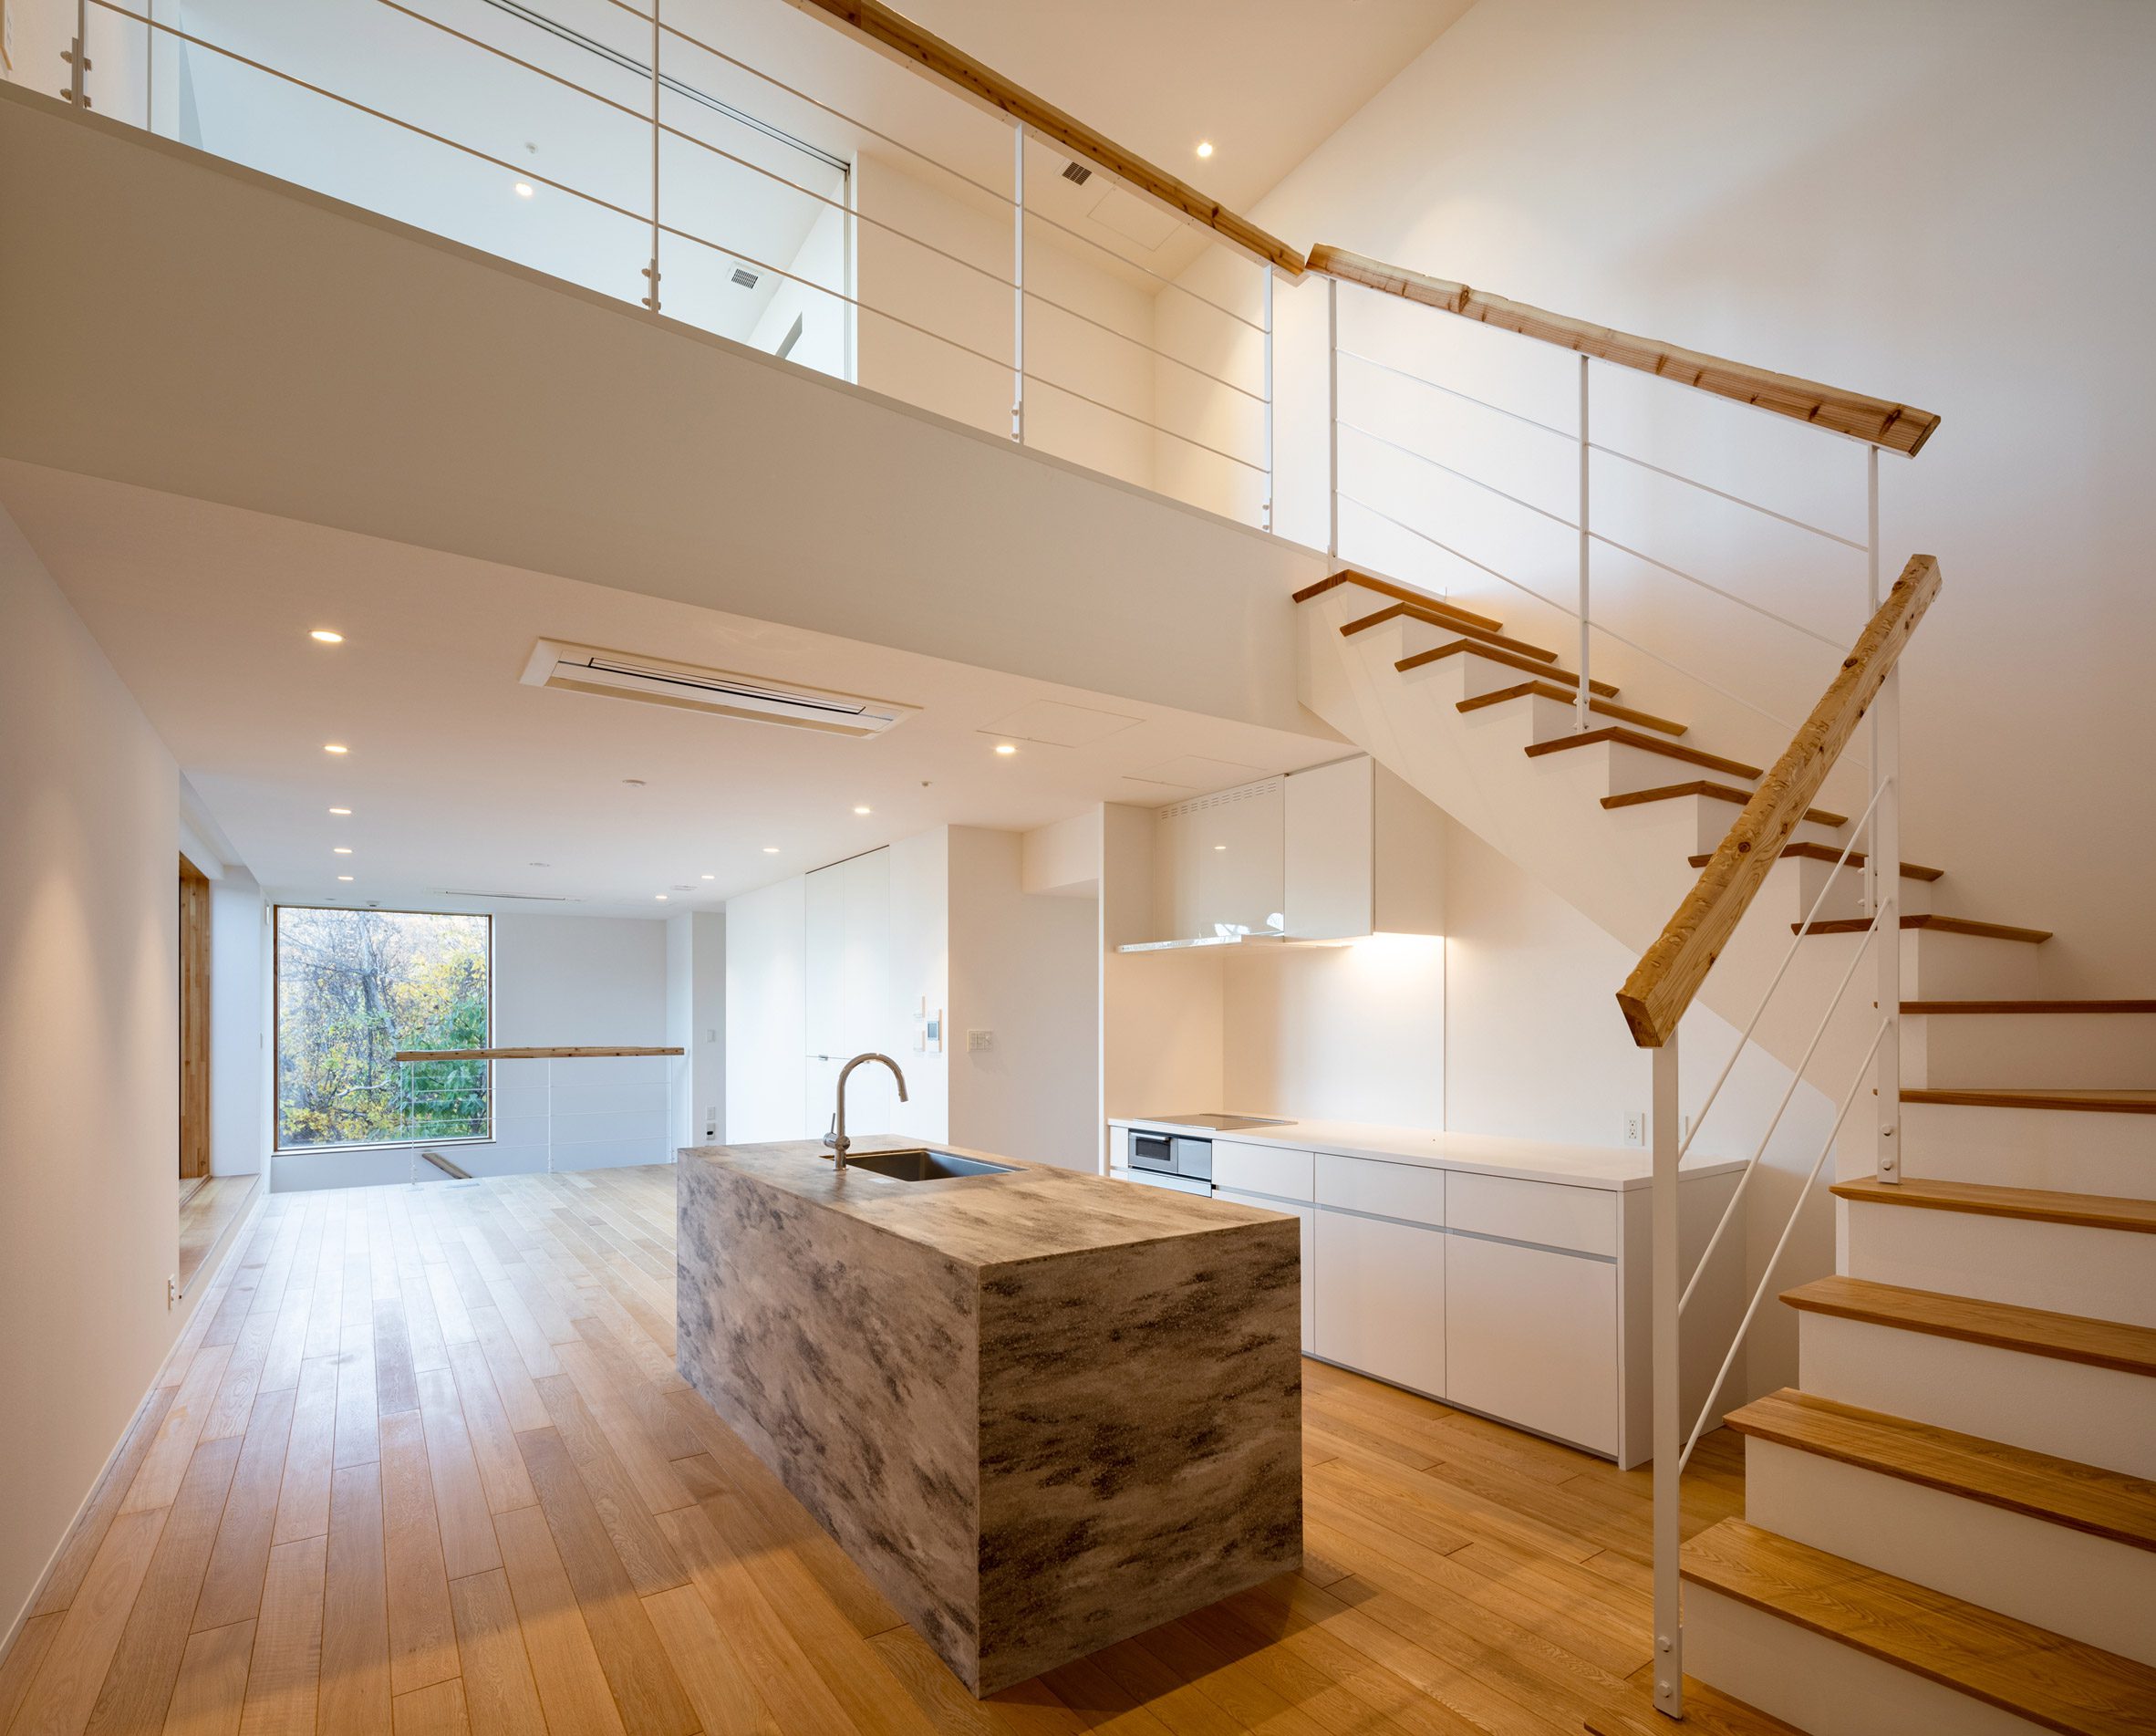 Interior image of a home